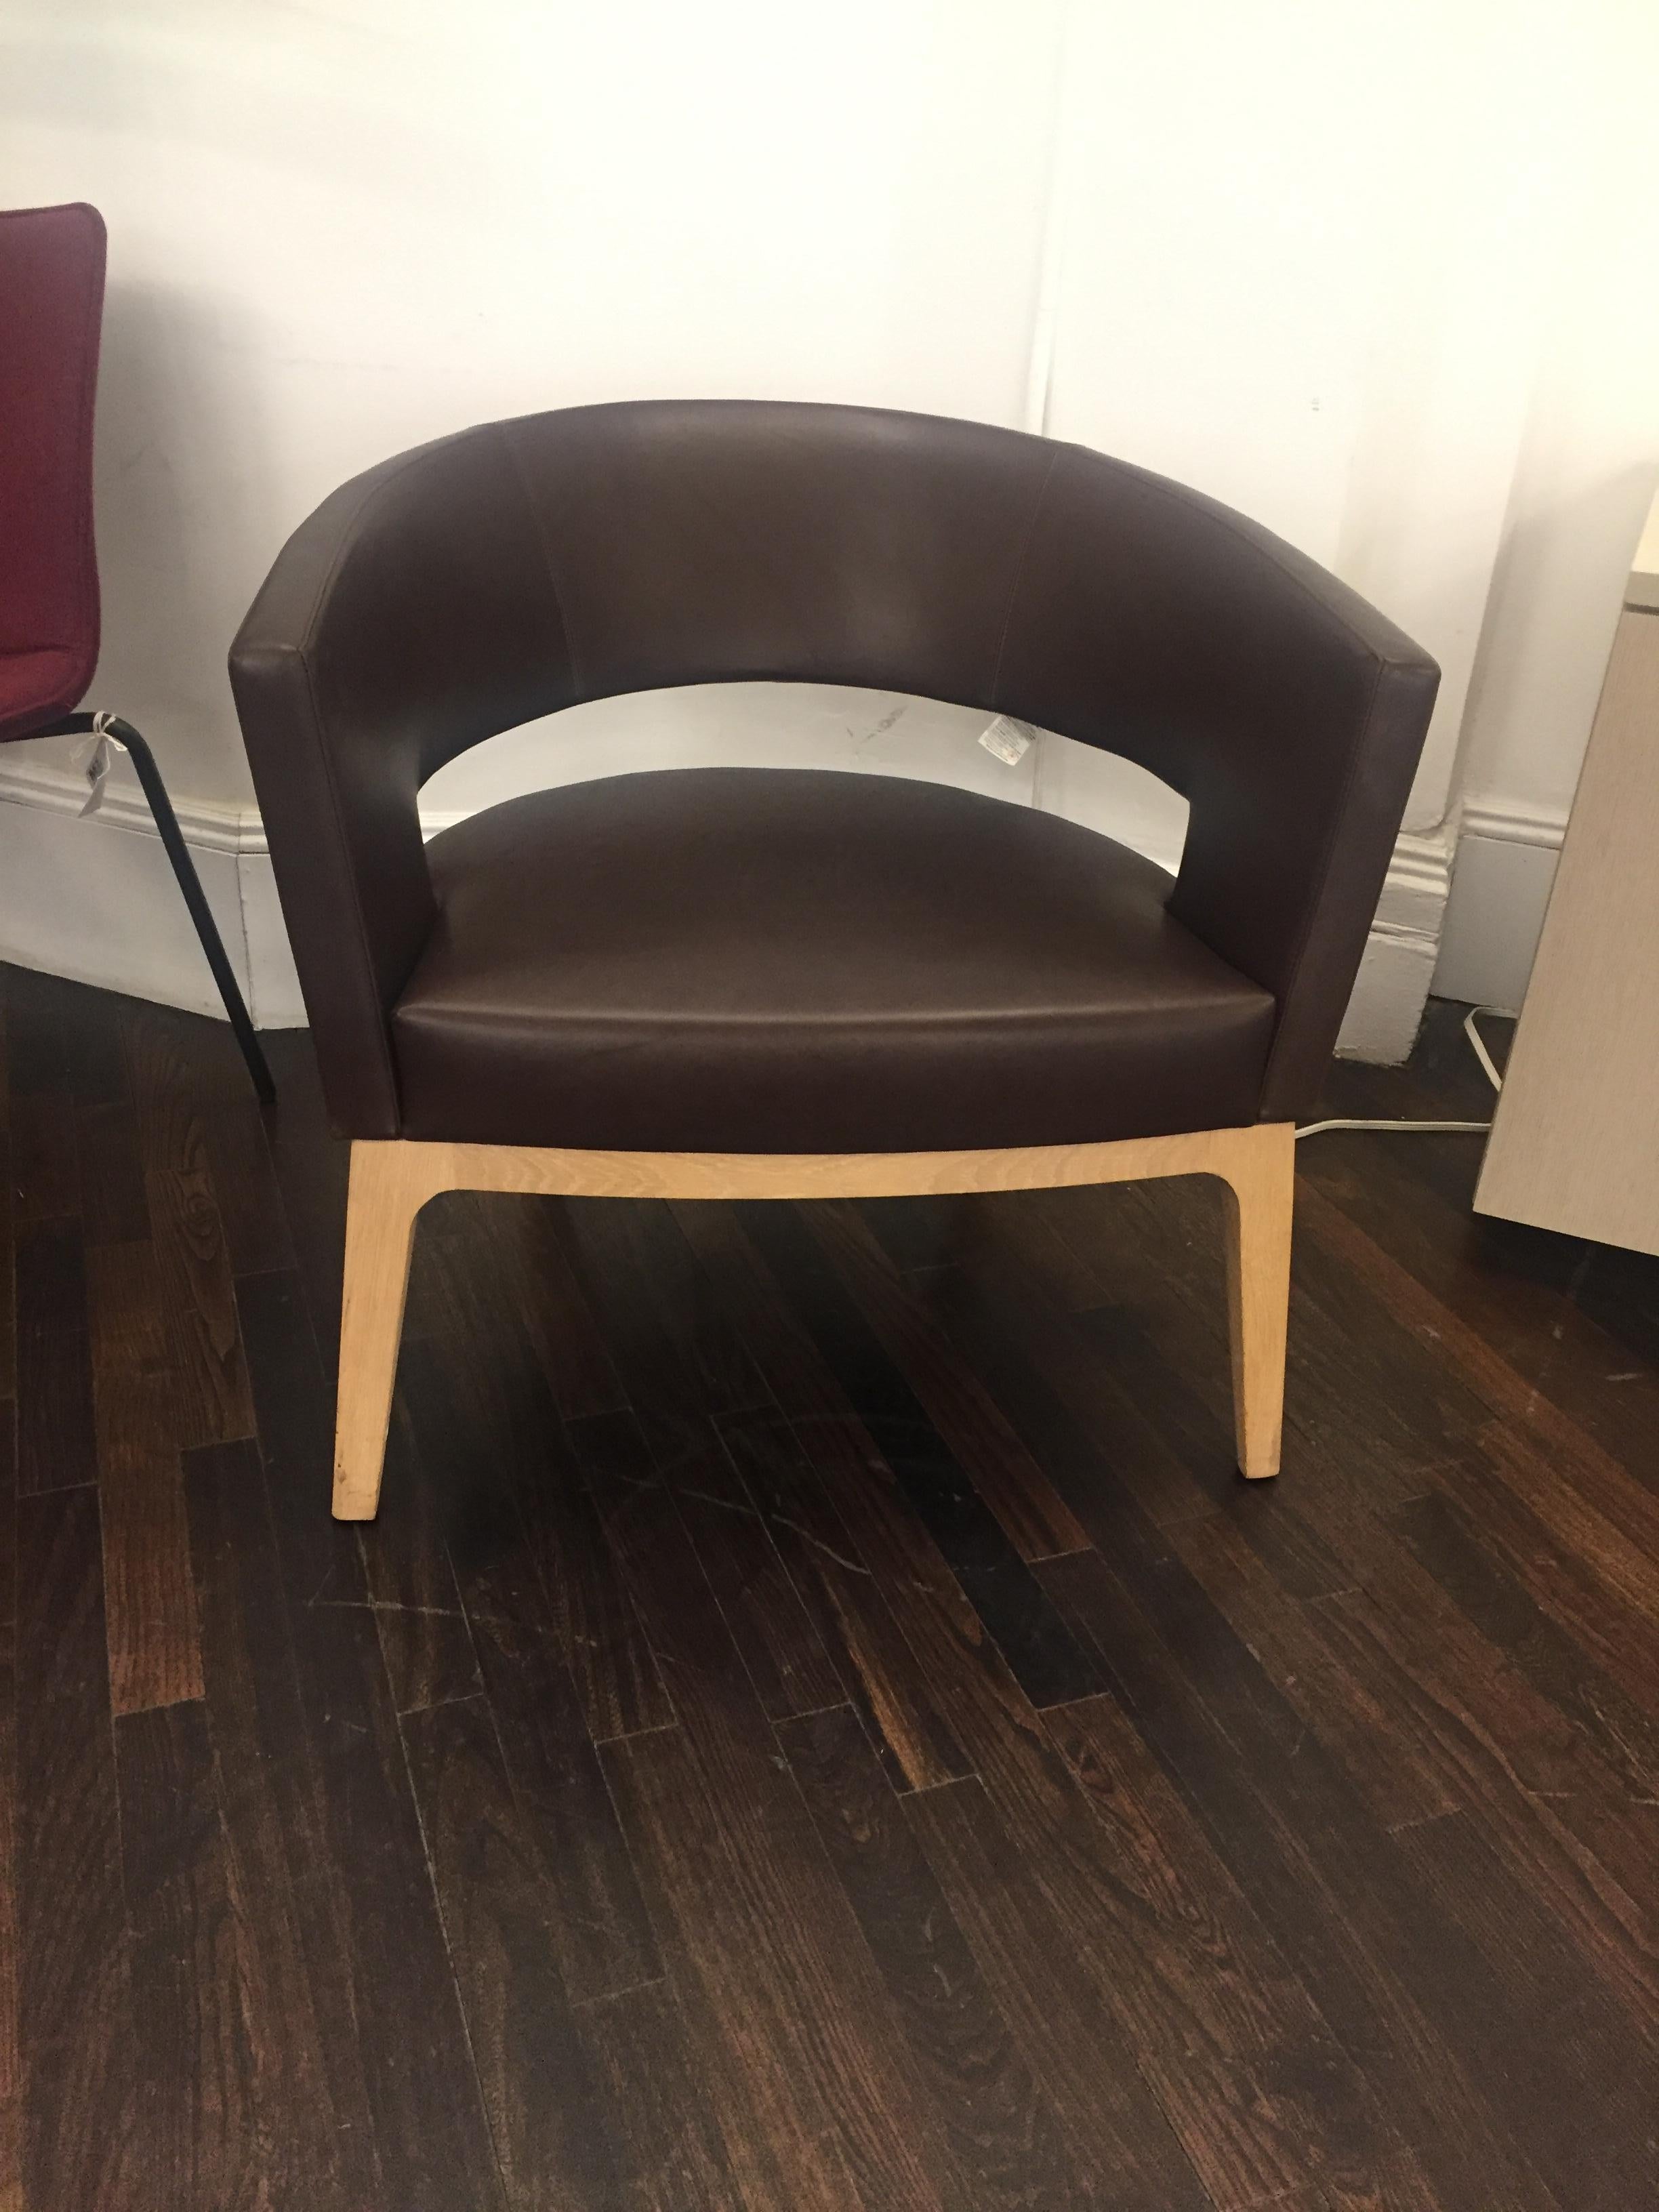 Montis Turner chair

Oak base
Brown leather
Original price: $2,975.